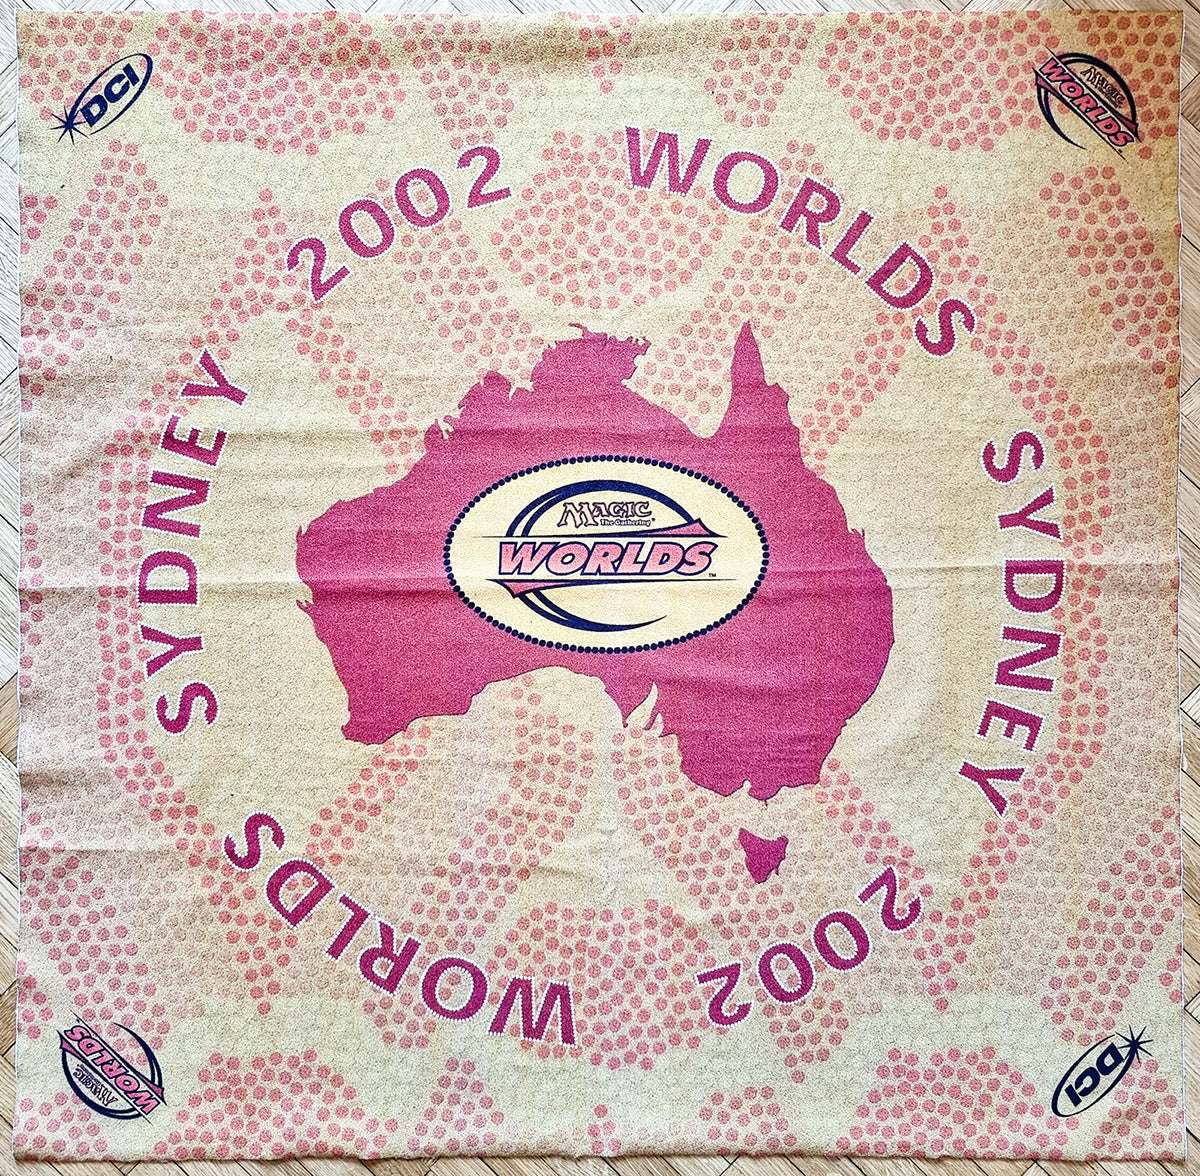 Worlds Sydney 2002 - MTG Playmat